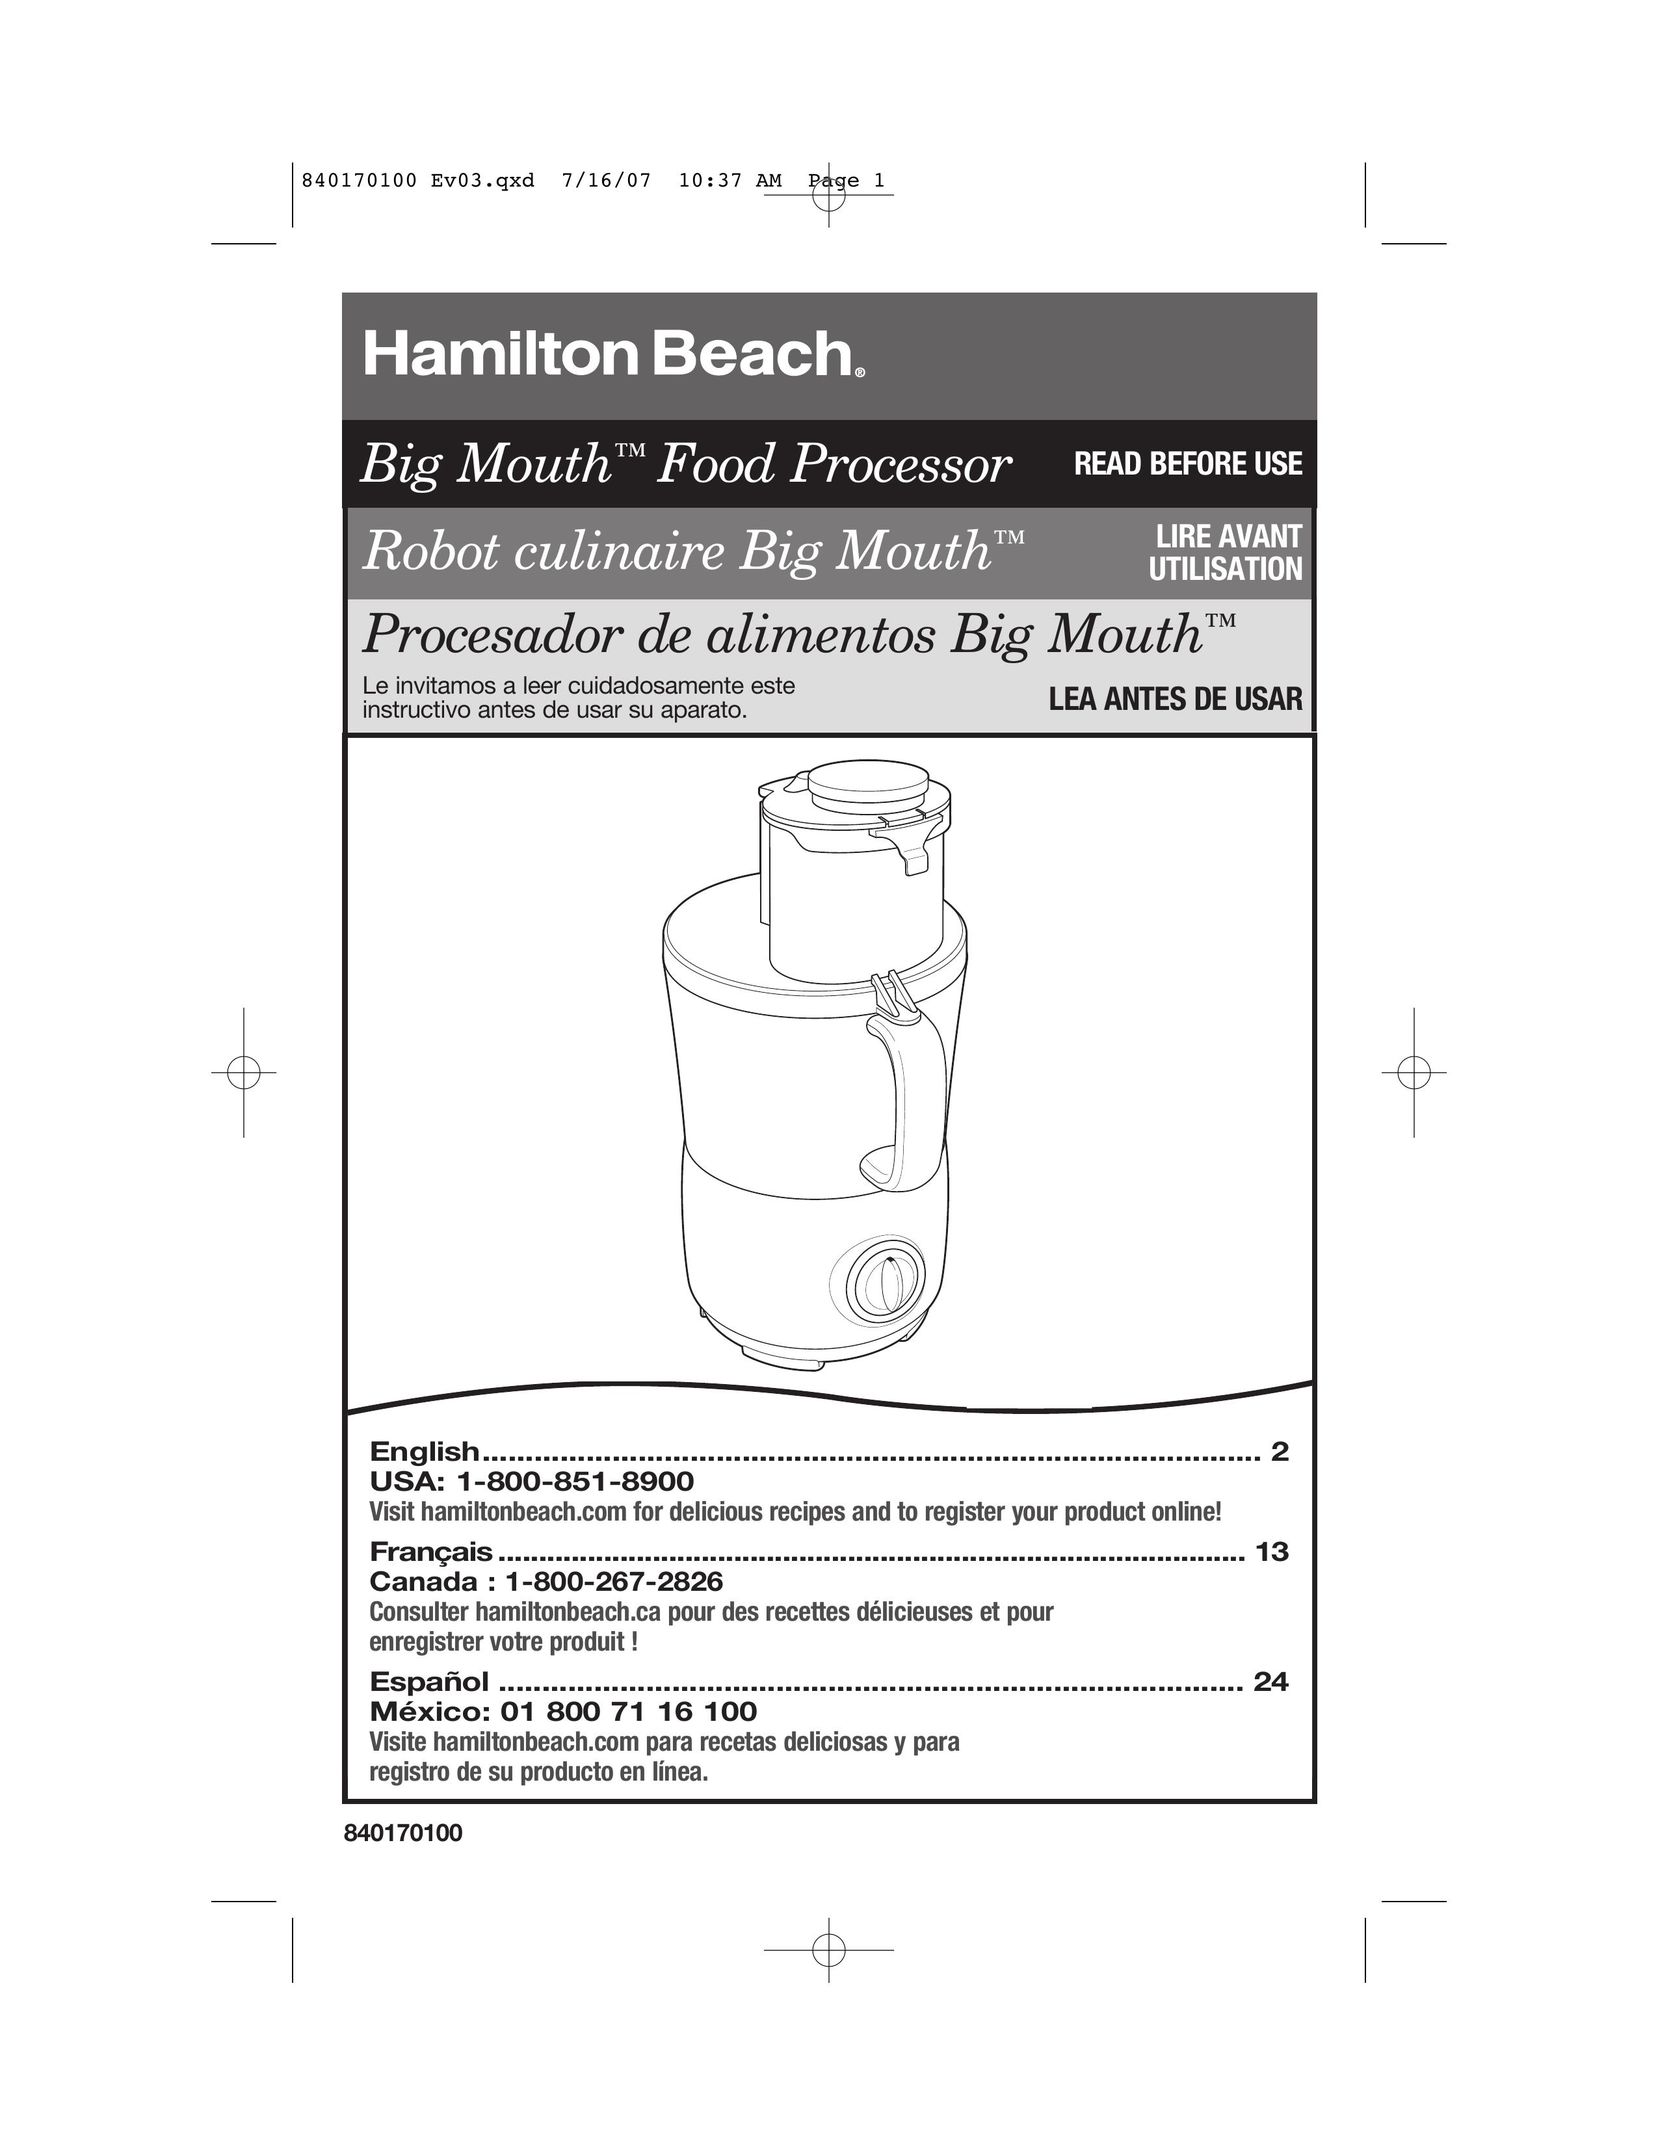 Hamilton Beach 840170100 Food Processor User Manual